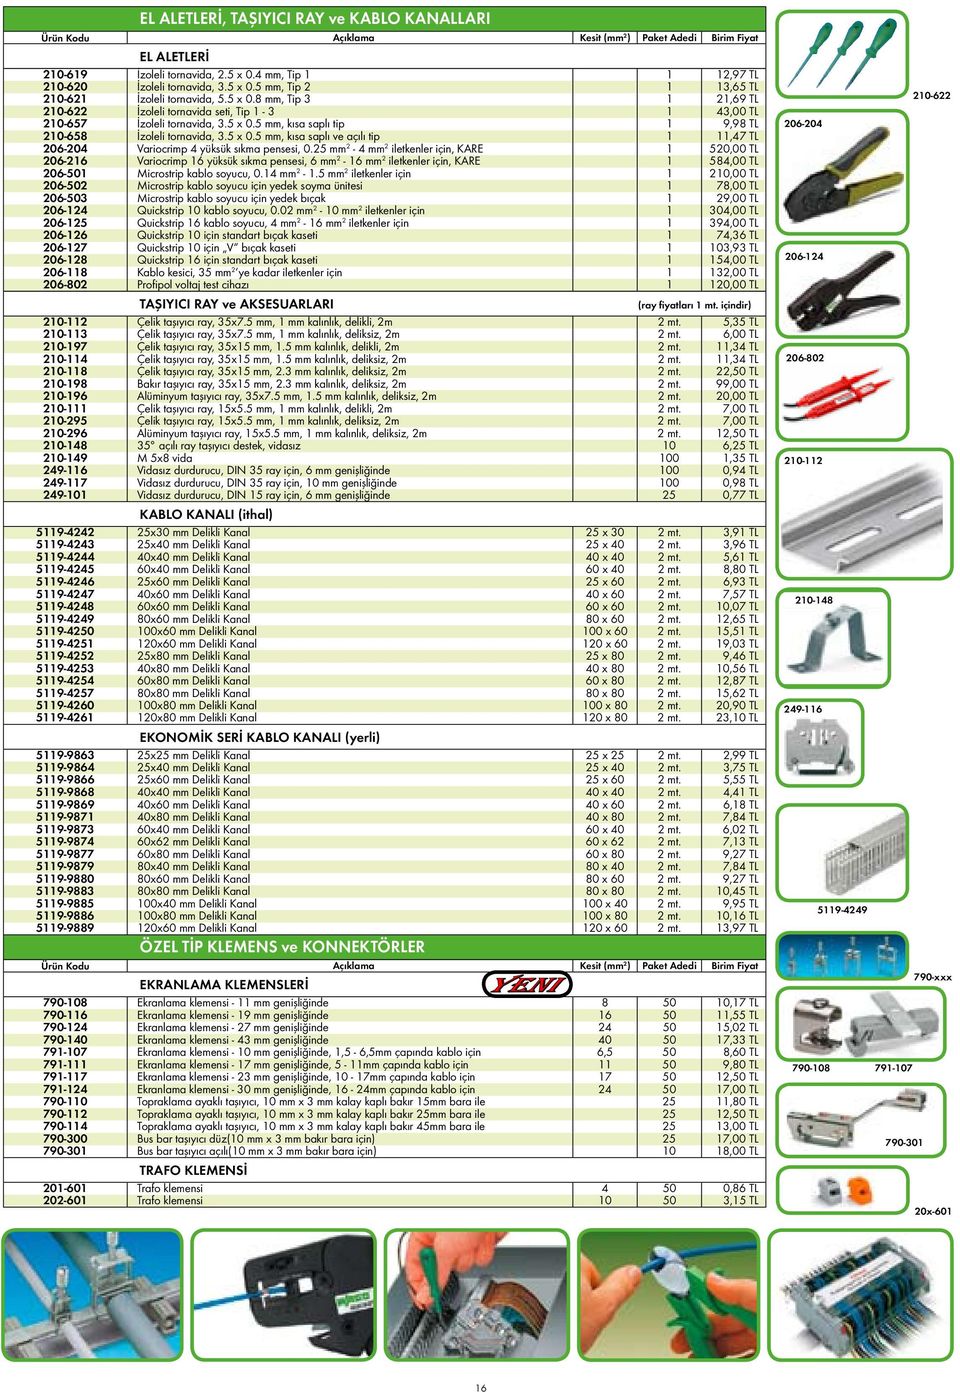 25 mm 2-4 mm 2 iletkenler için, KARE 1 520,00 TL 206-216 Variocrimp 16 yüksük sıkma pensesi, 6 mm 2-16 mm 2 iletkenler için, KARE 1 584,00 TL 206-501 Microstrip kablo soyucu, 0.14 mm 2-1.